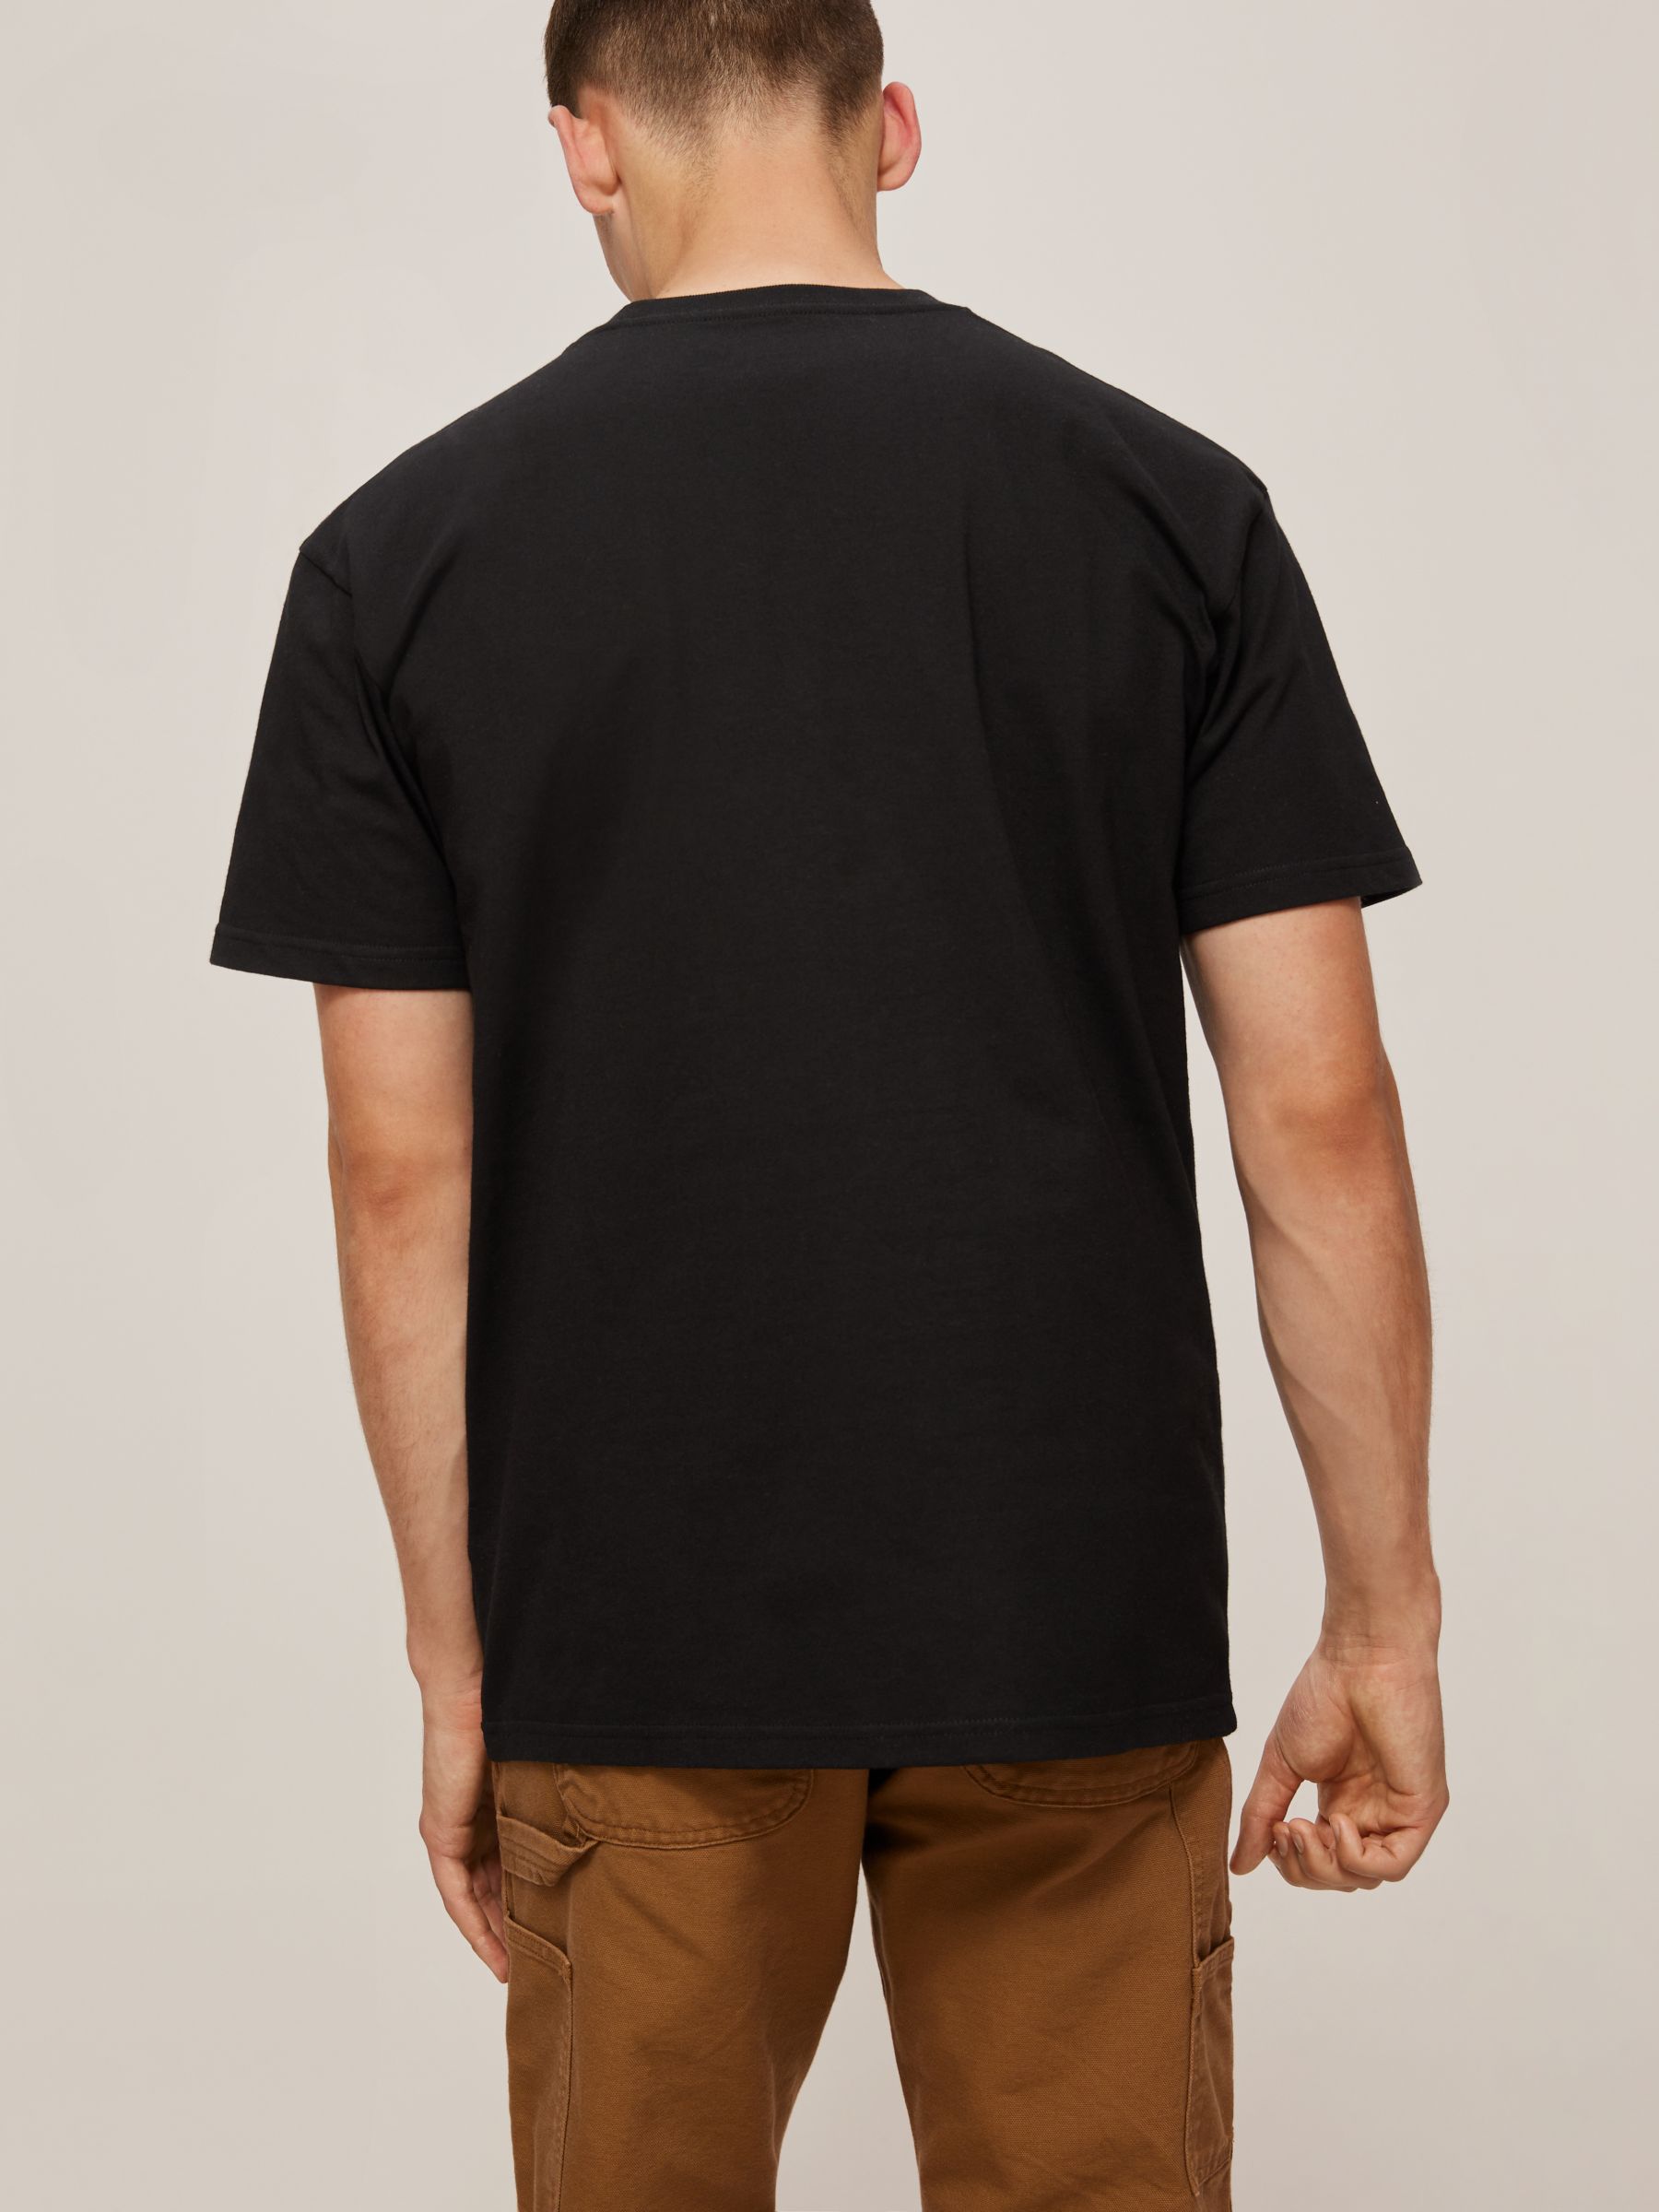 Carhartt WIP Chase Short Sleeve T-Shirt, Black at John Lewis & Partners